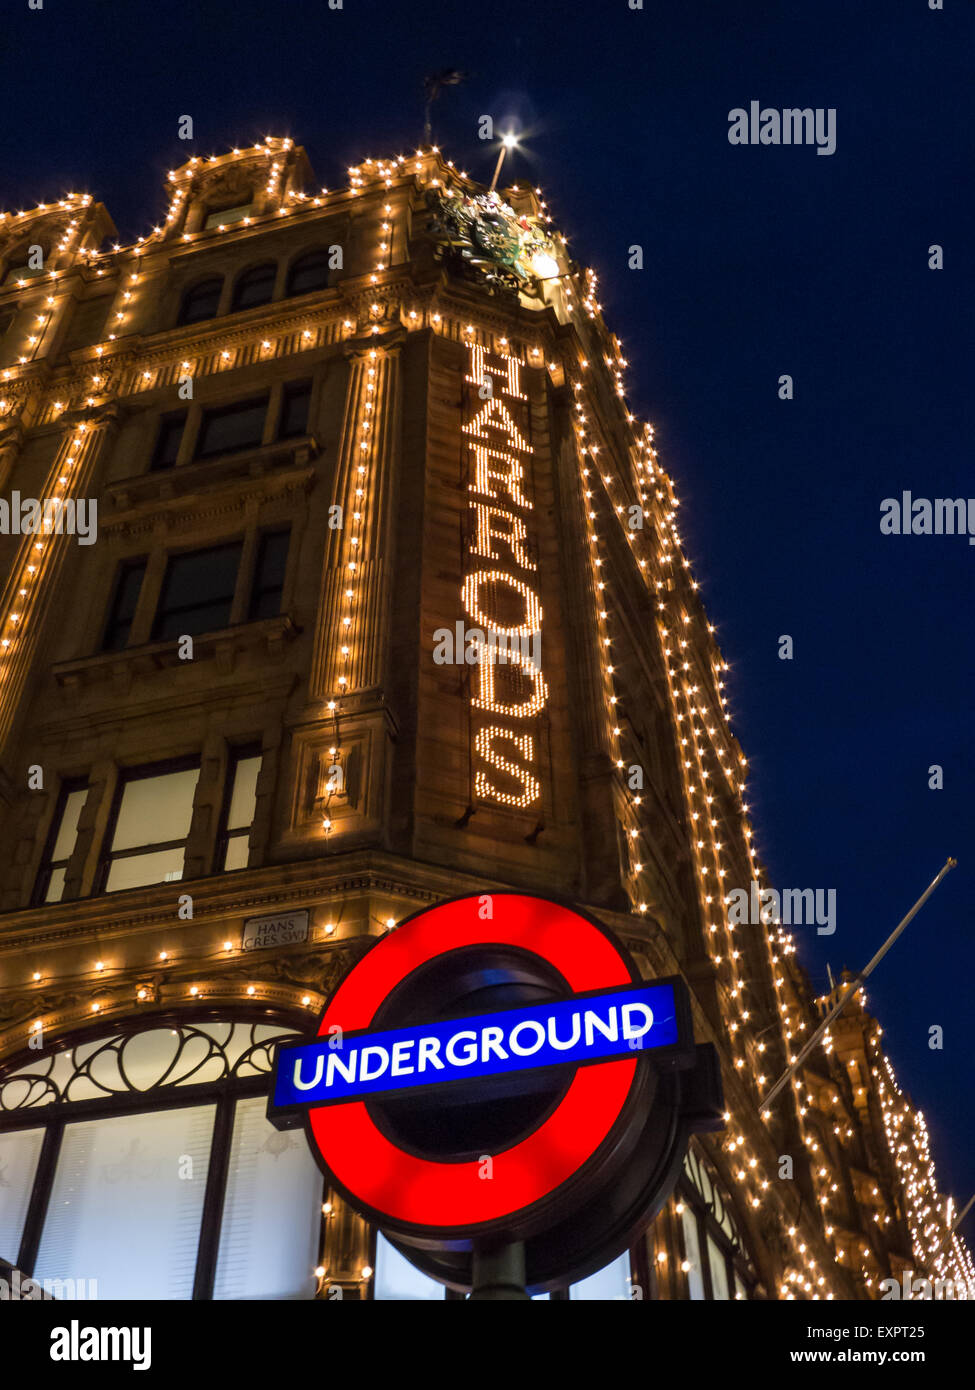 Knightsbridge, London, England. Harrods lights and Underground sign. Stock Photo